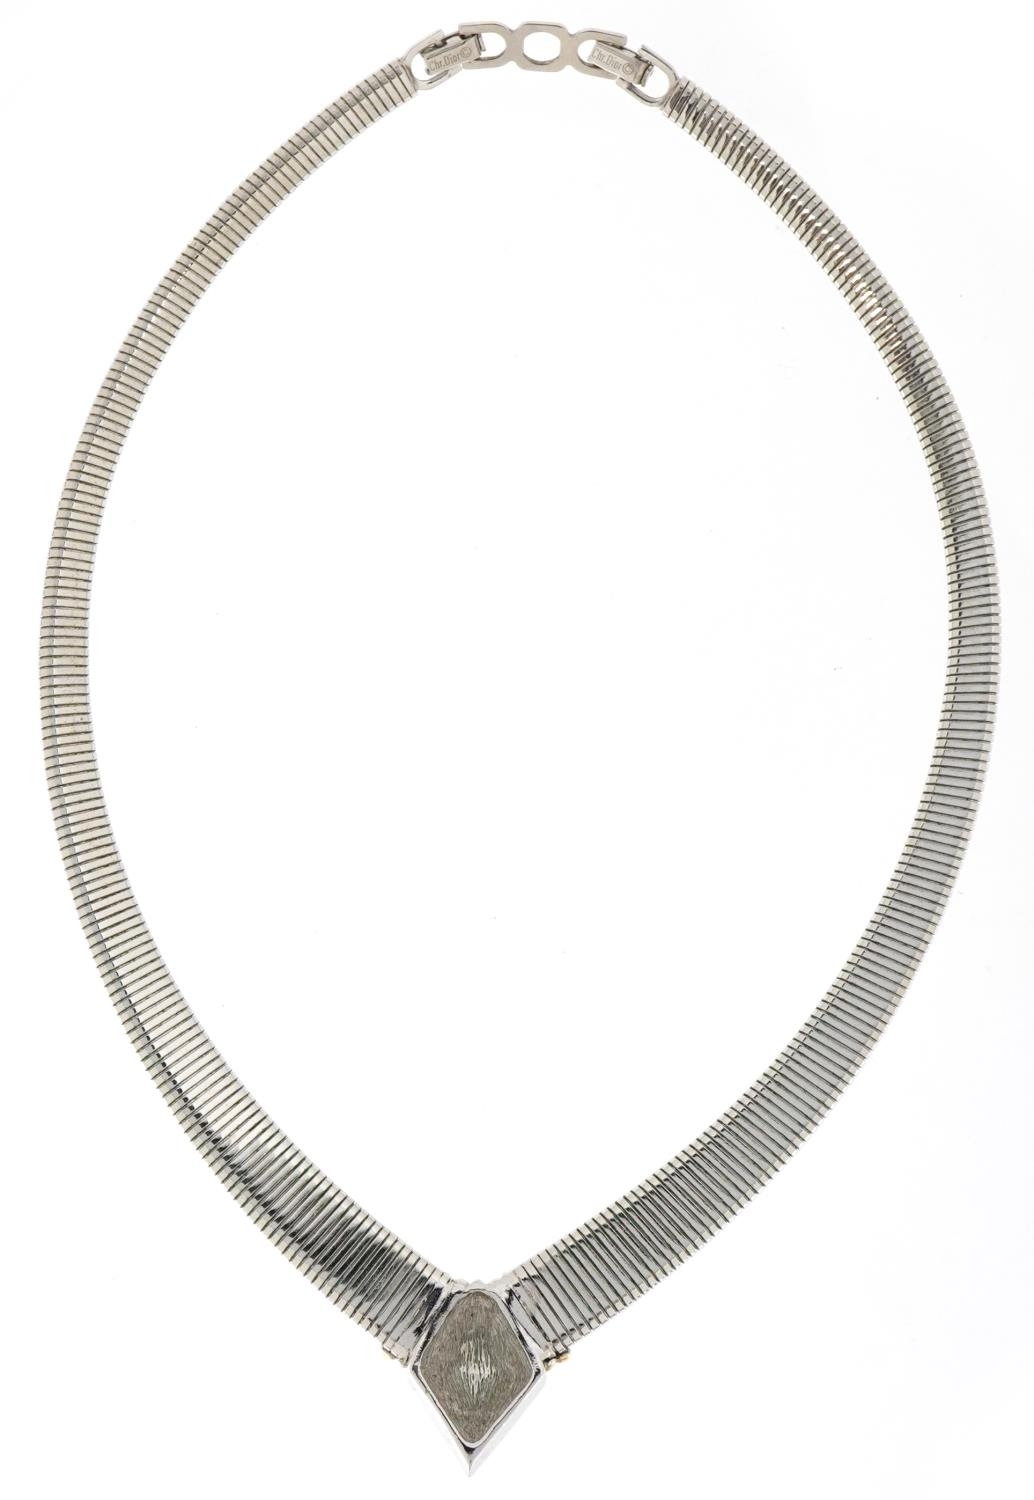 Christian Dior, vintage necklace, 40cm in length, 30.5g - Image 3 of 4